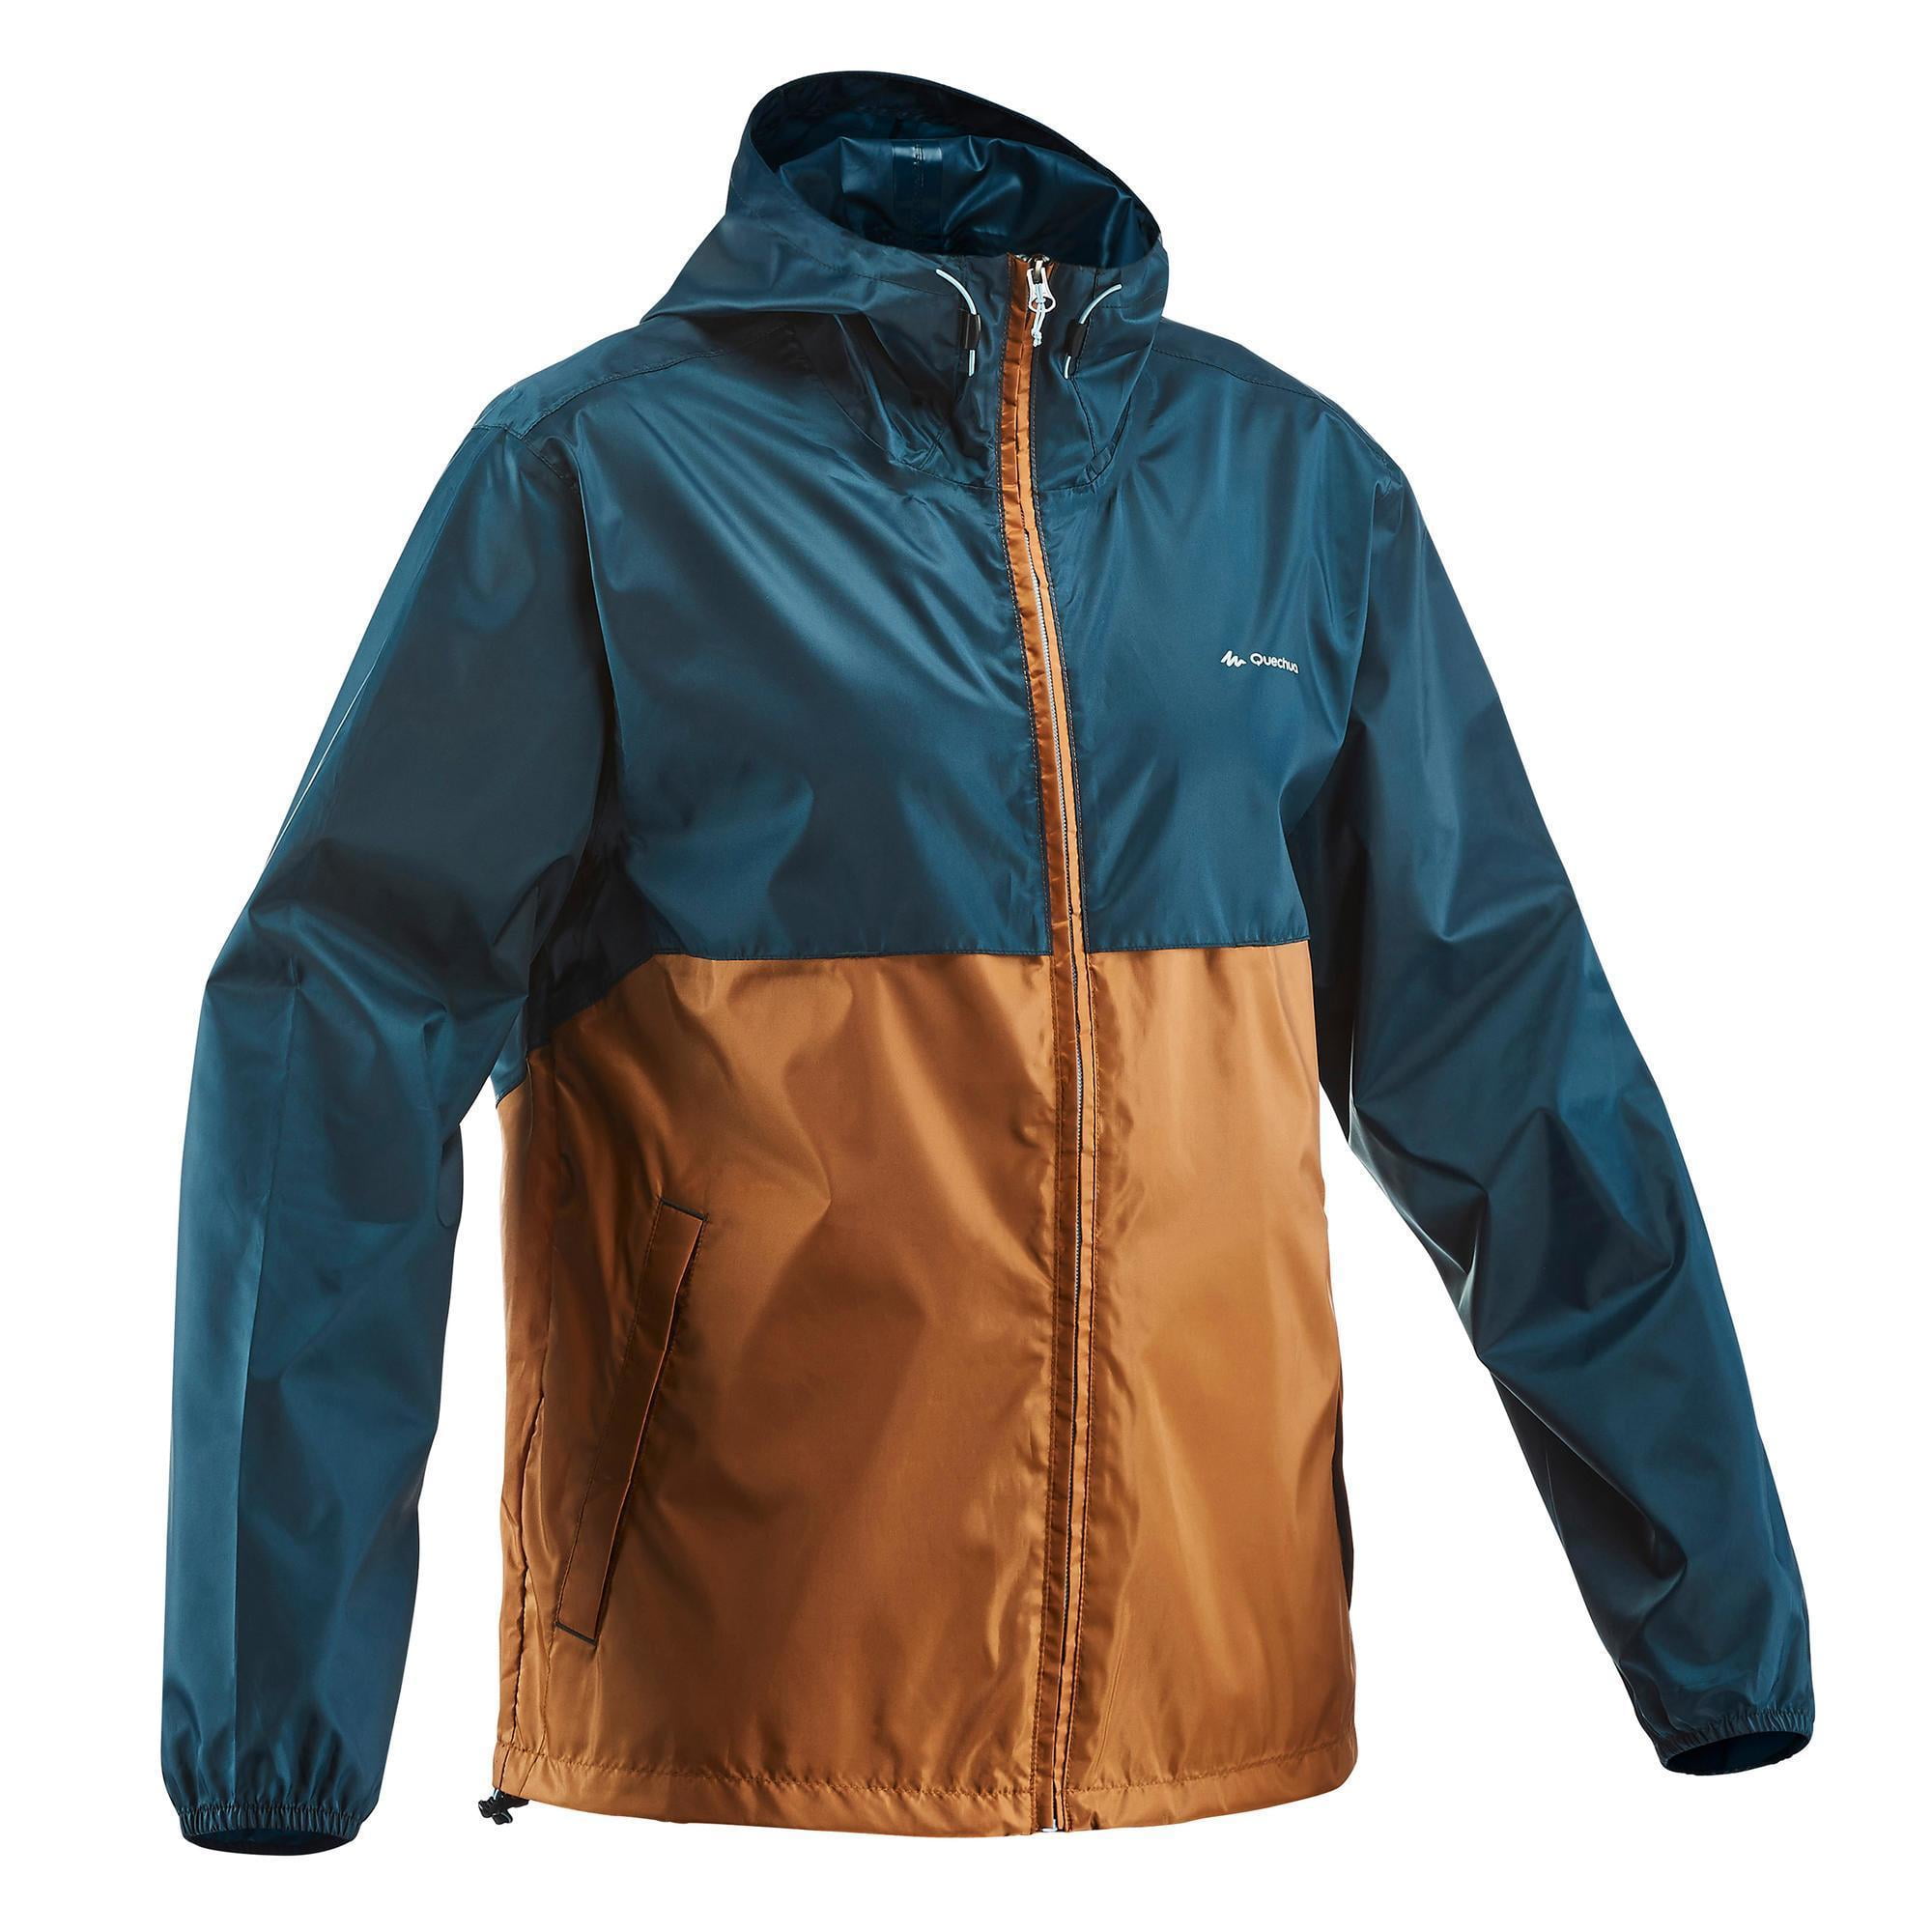 decathlon waterproof jacket